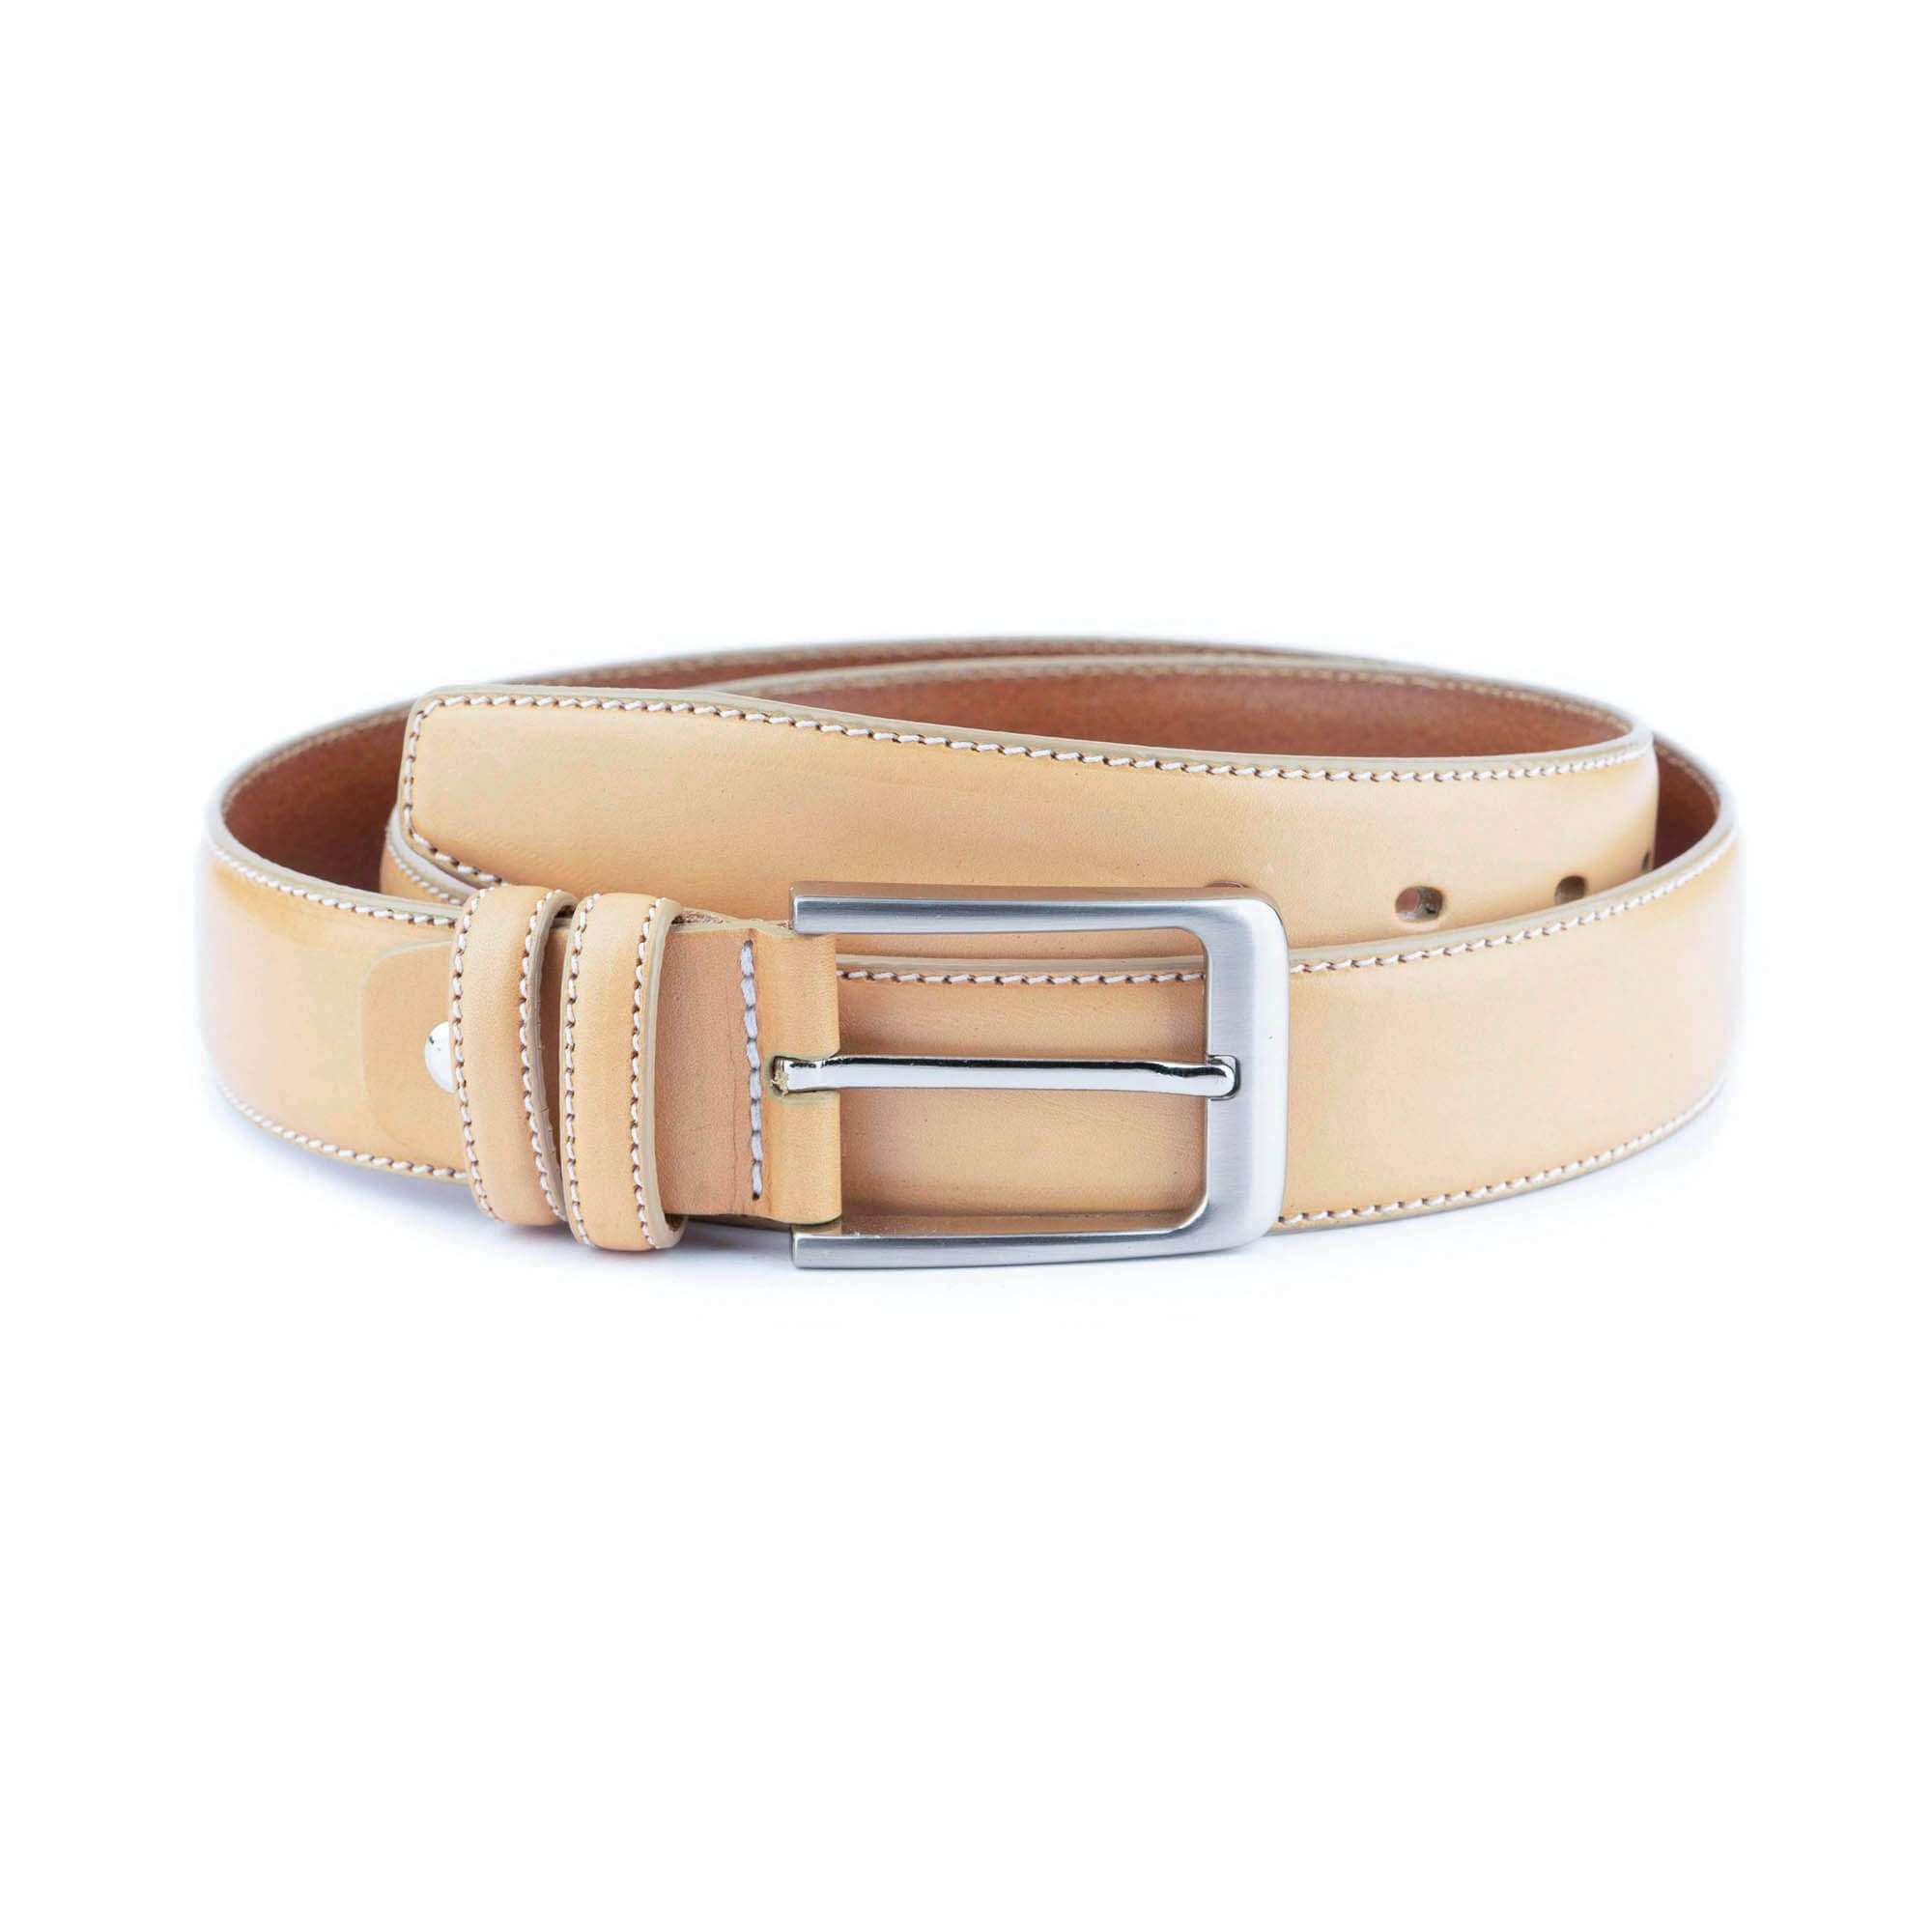 3.5cm Cross-Grain Leather Belt